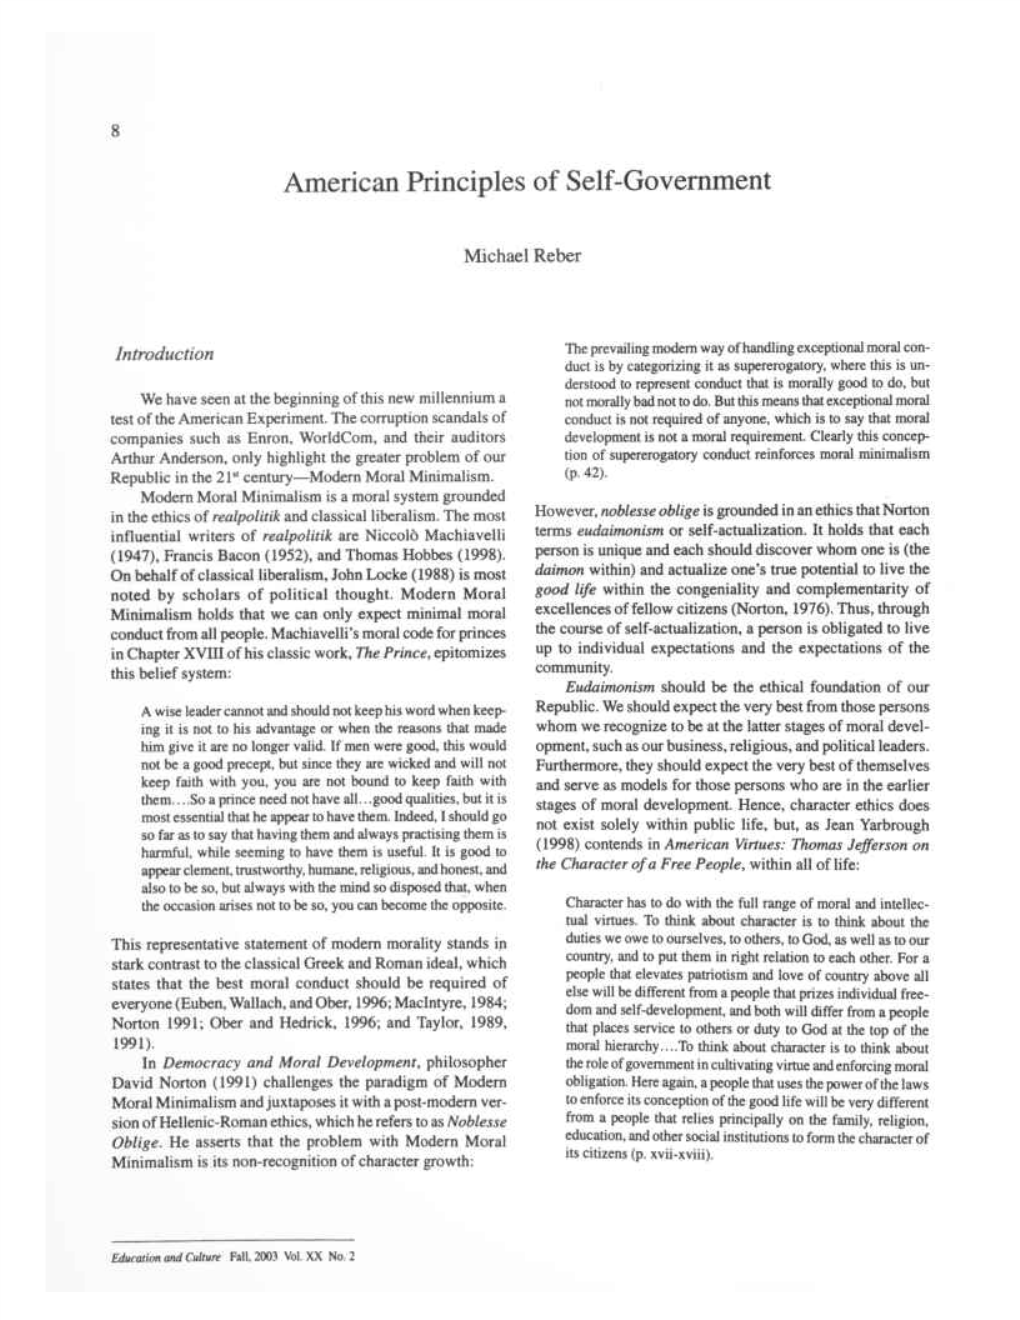 American Principles of Self-Government